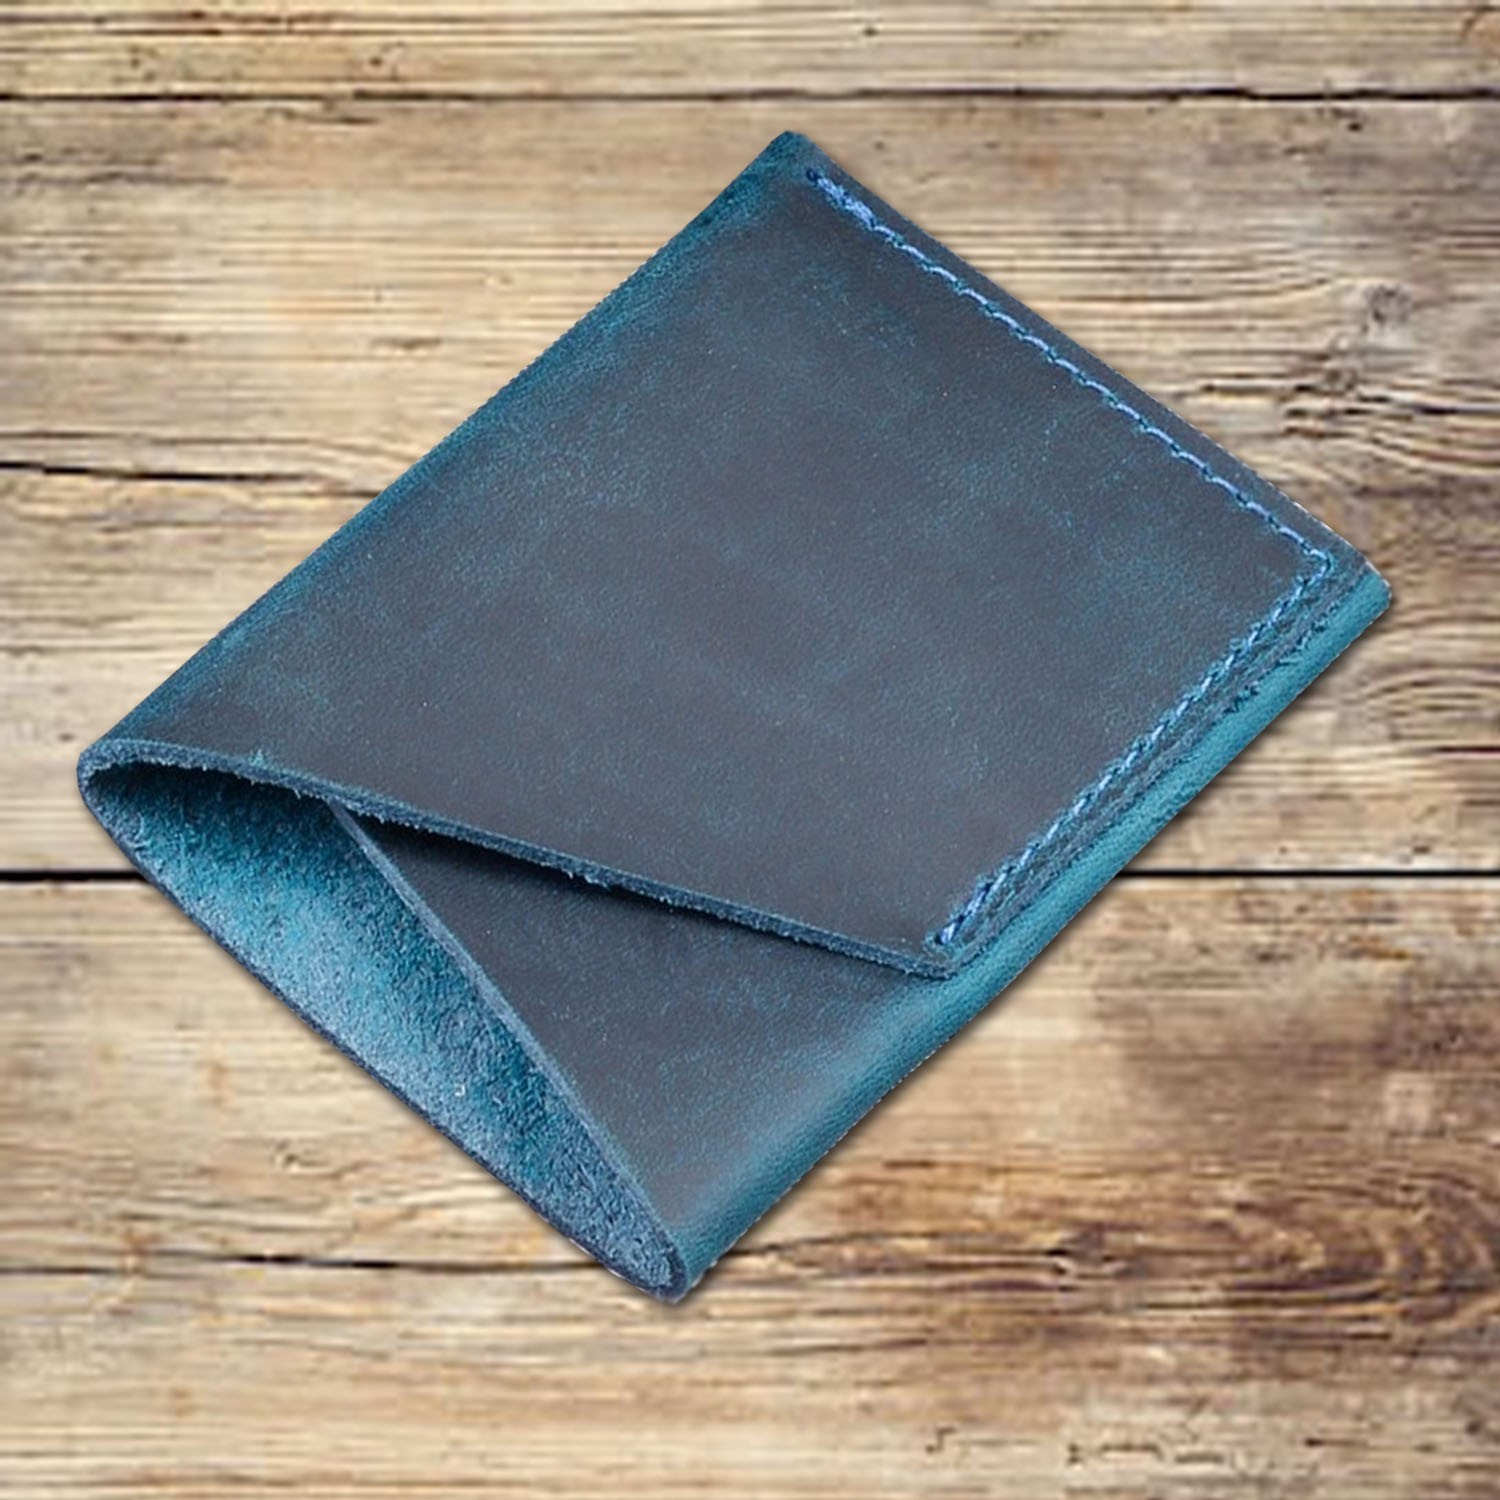 2 slots folded black leather card wallet